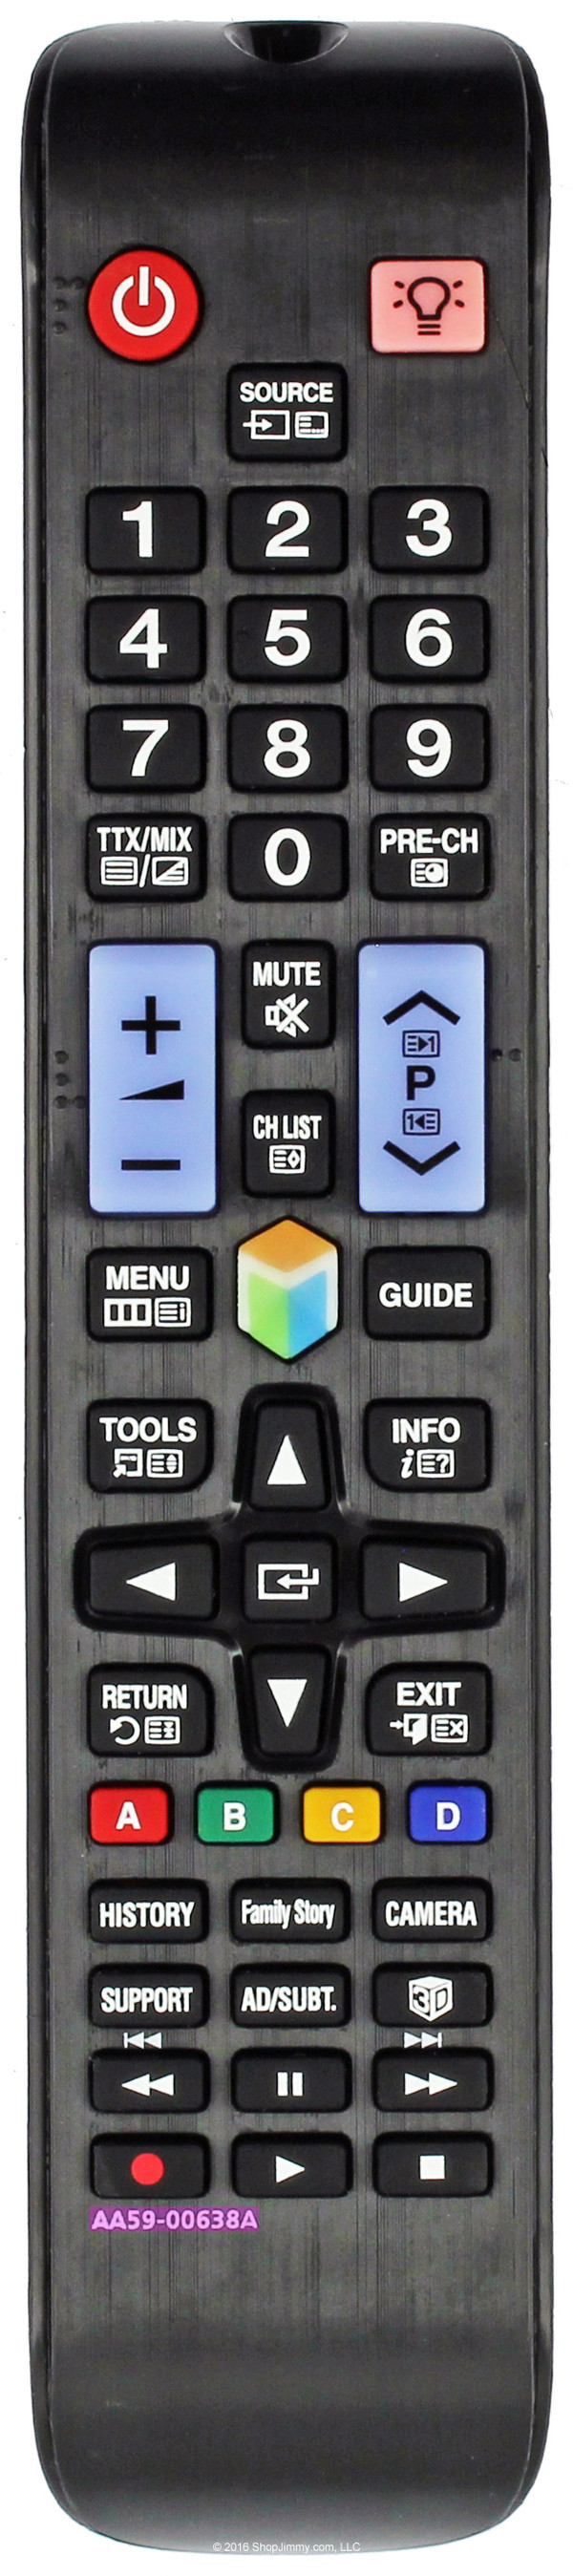 Samsung AA59-00638A Remote Control - New